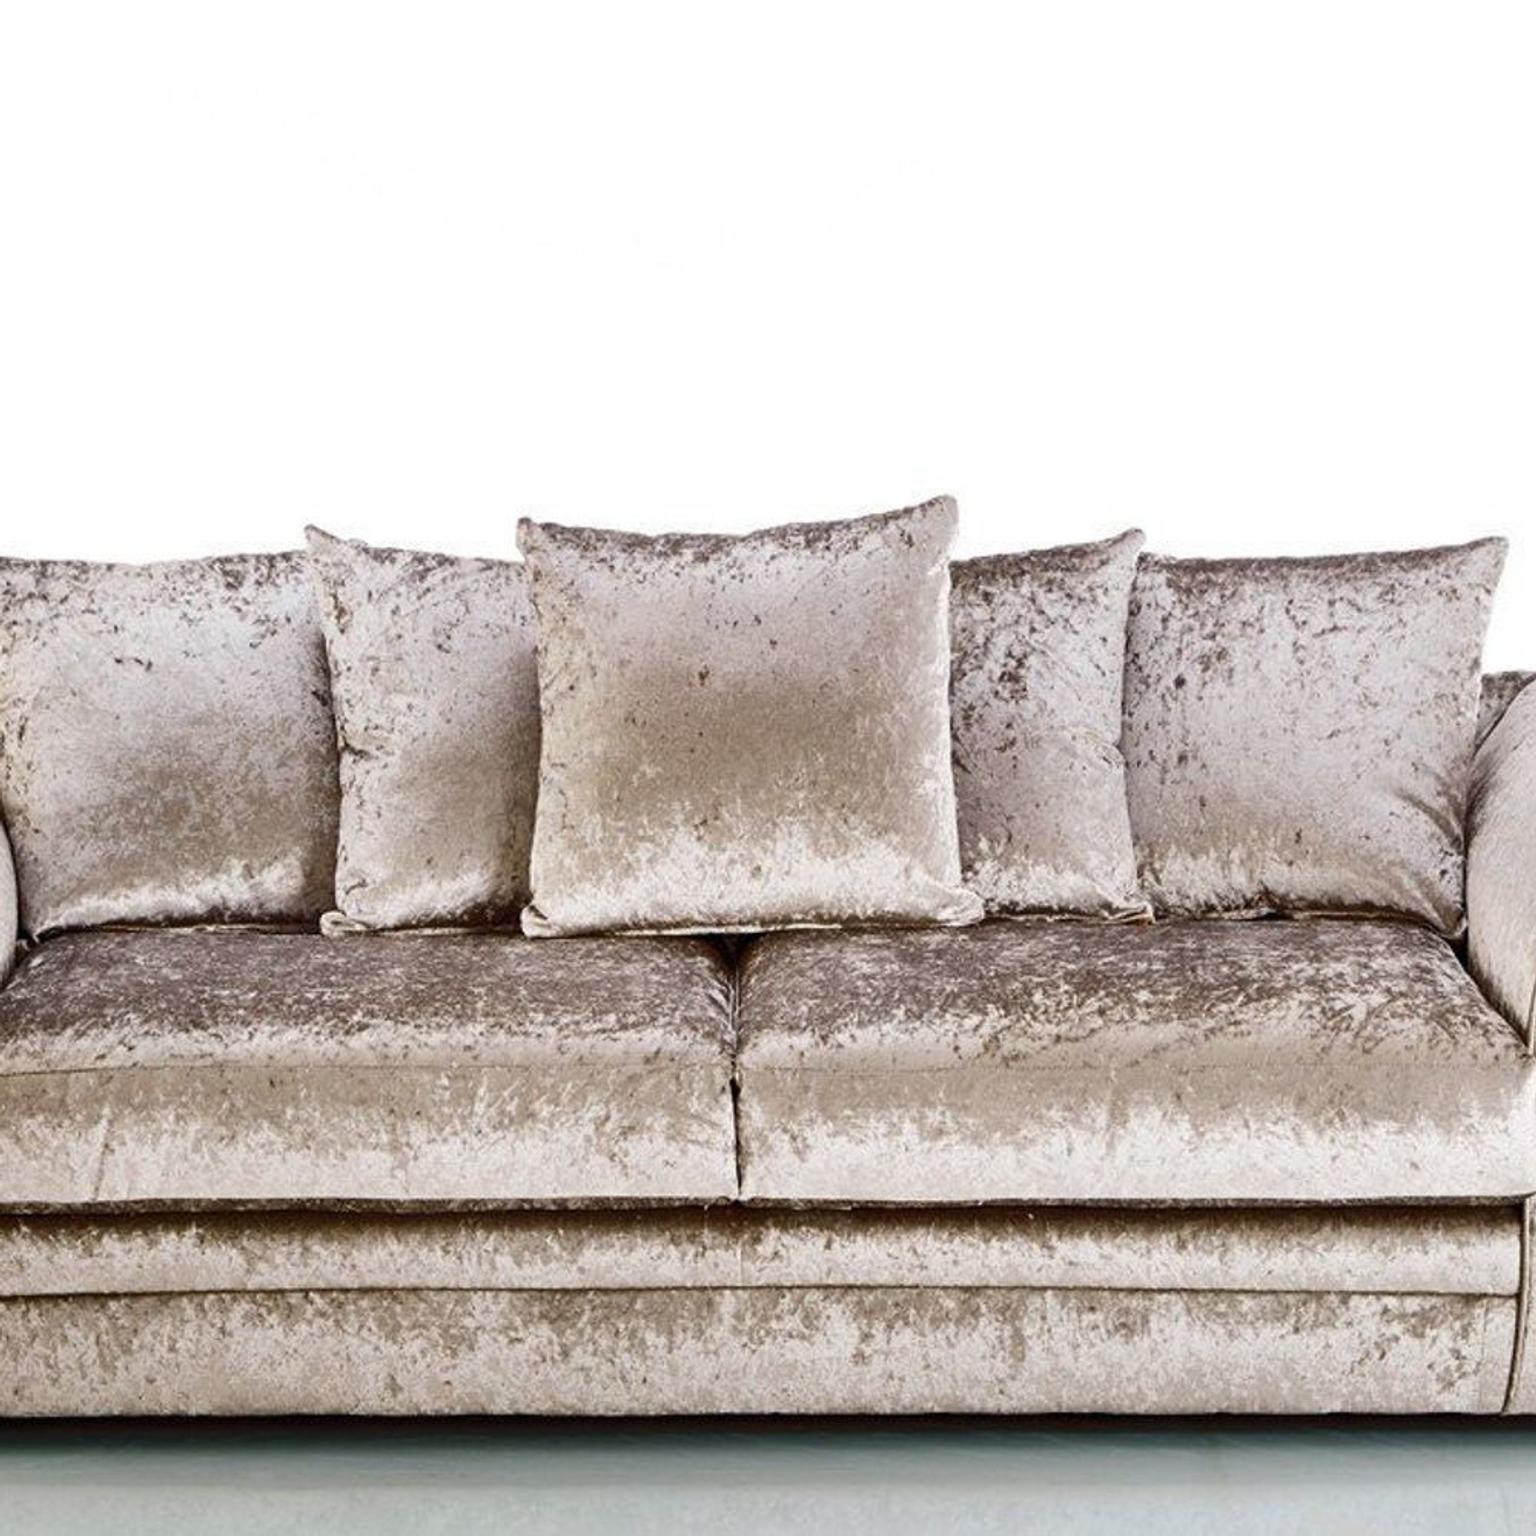 Chicago Sofa In B11 Birmingham Fur 240 00 Zum Verkauf Shpock De